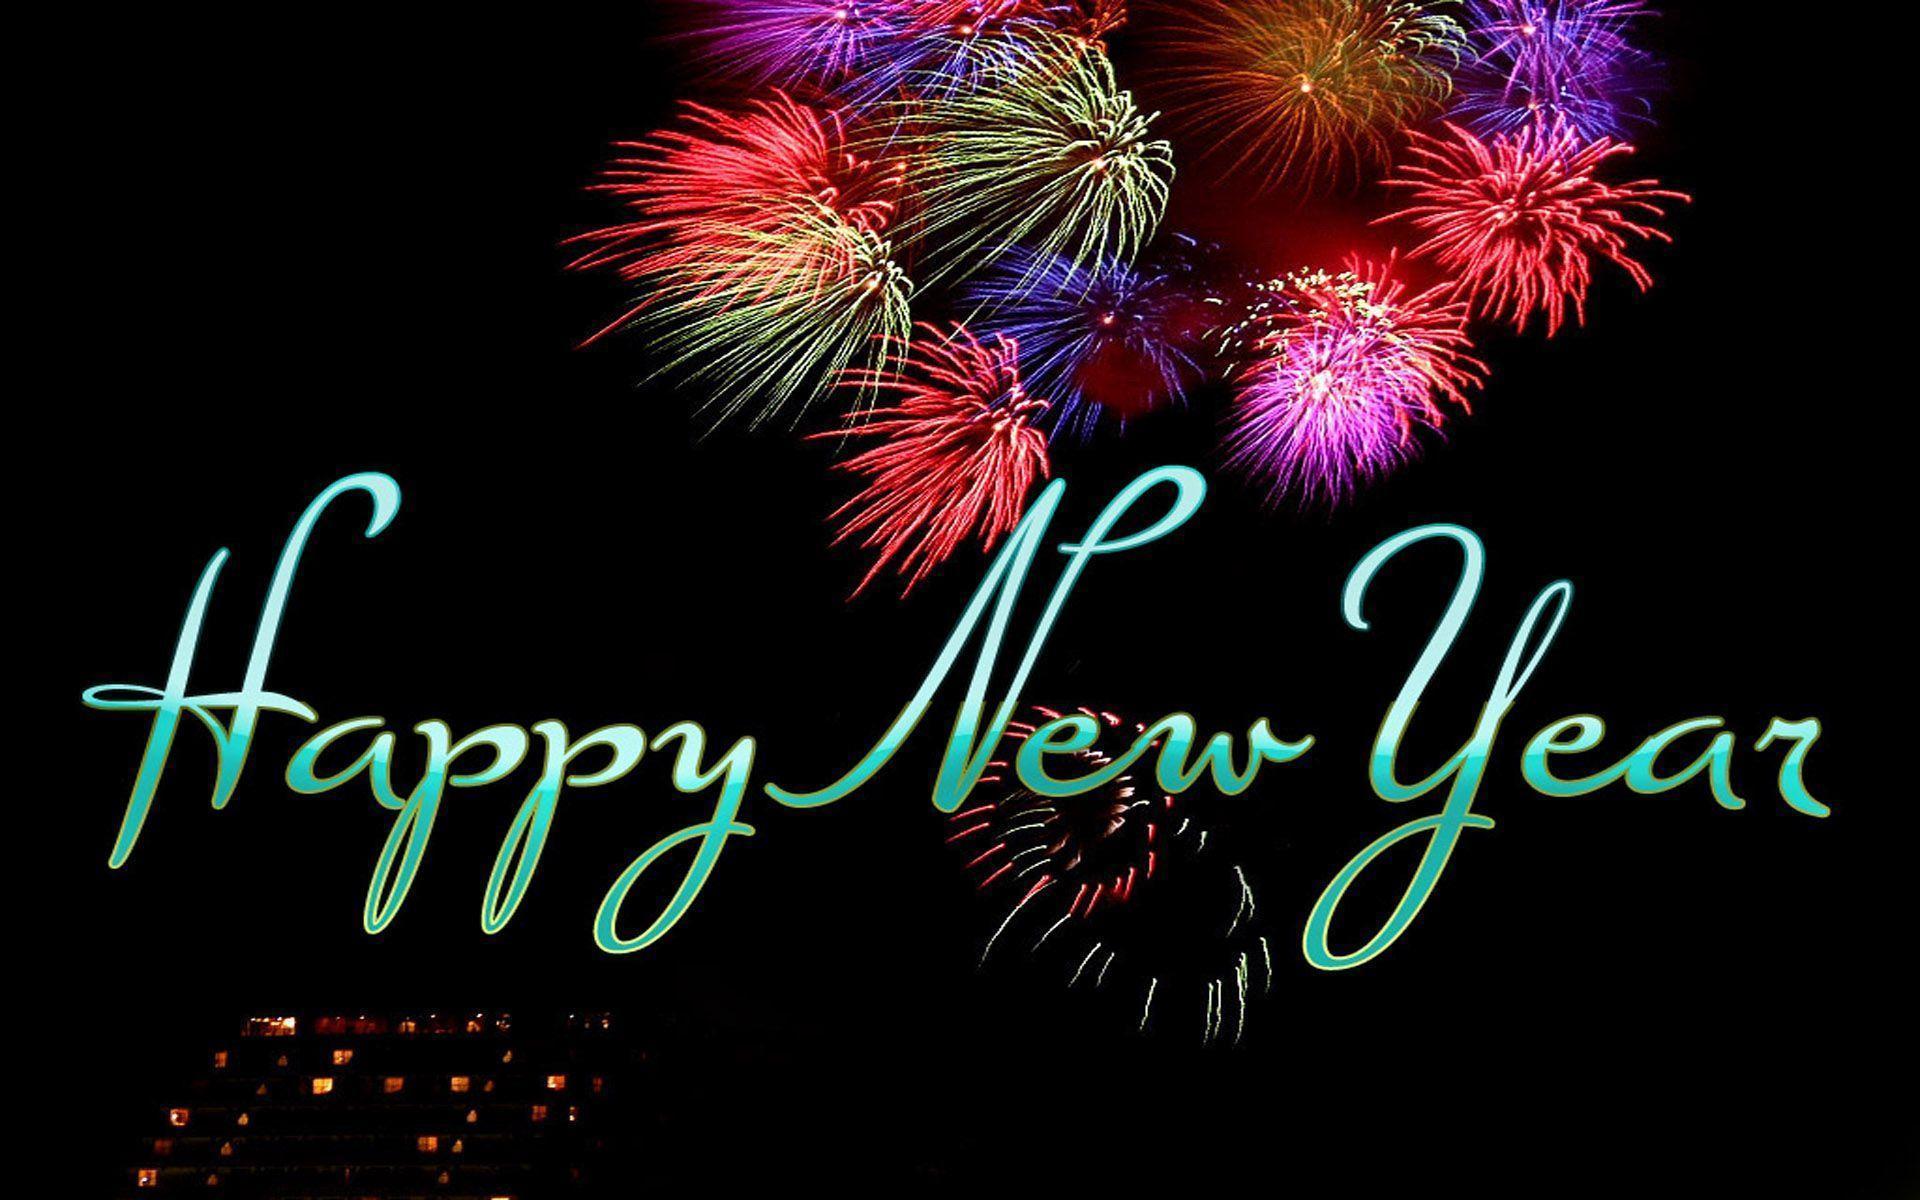 Happy New Year 2015 GIF Image, Wallpaper. Happy New Year 2015